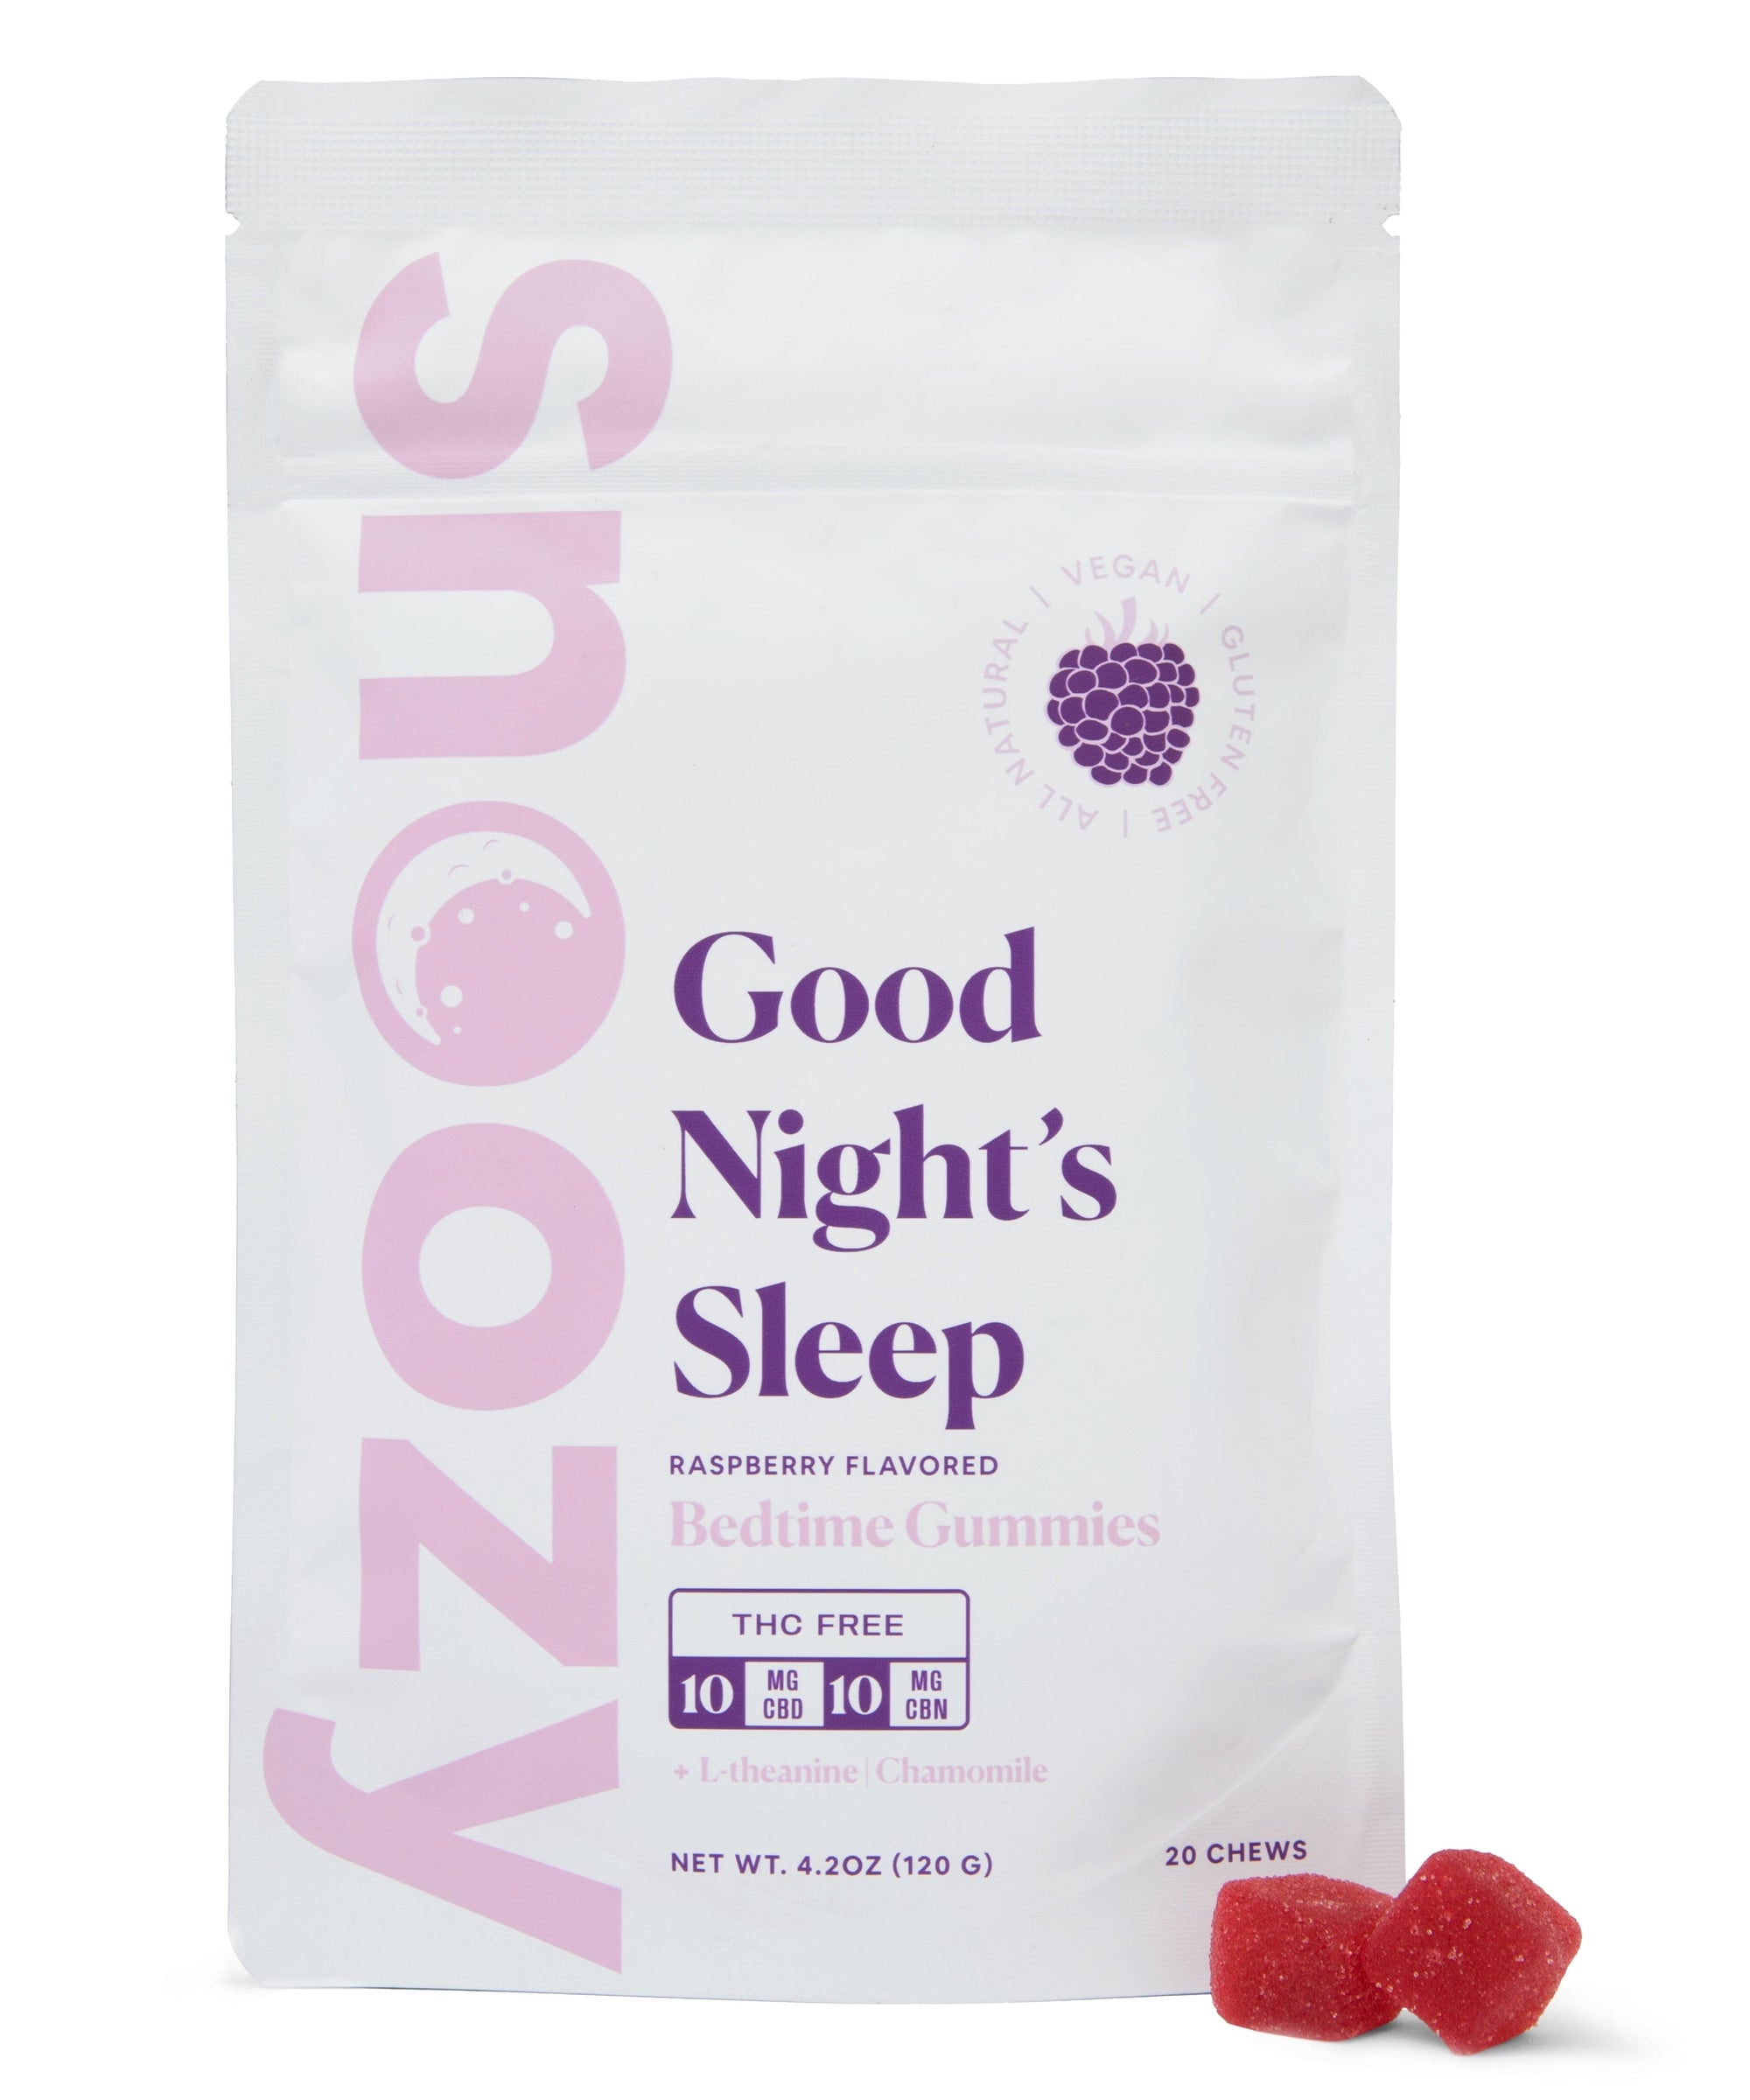 Good Night's Sleep: THC-Free Bedtime Gummies - Wholesale